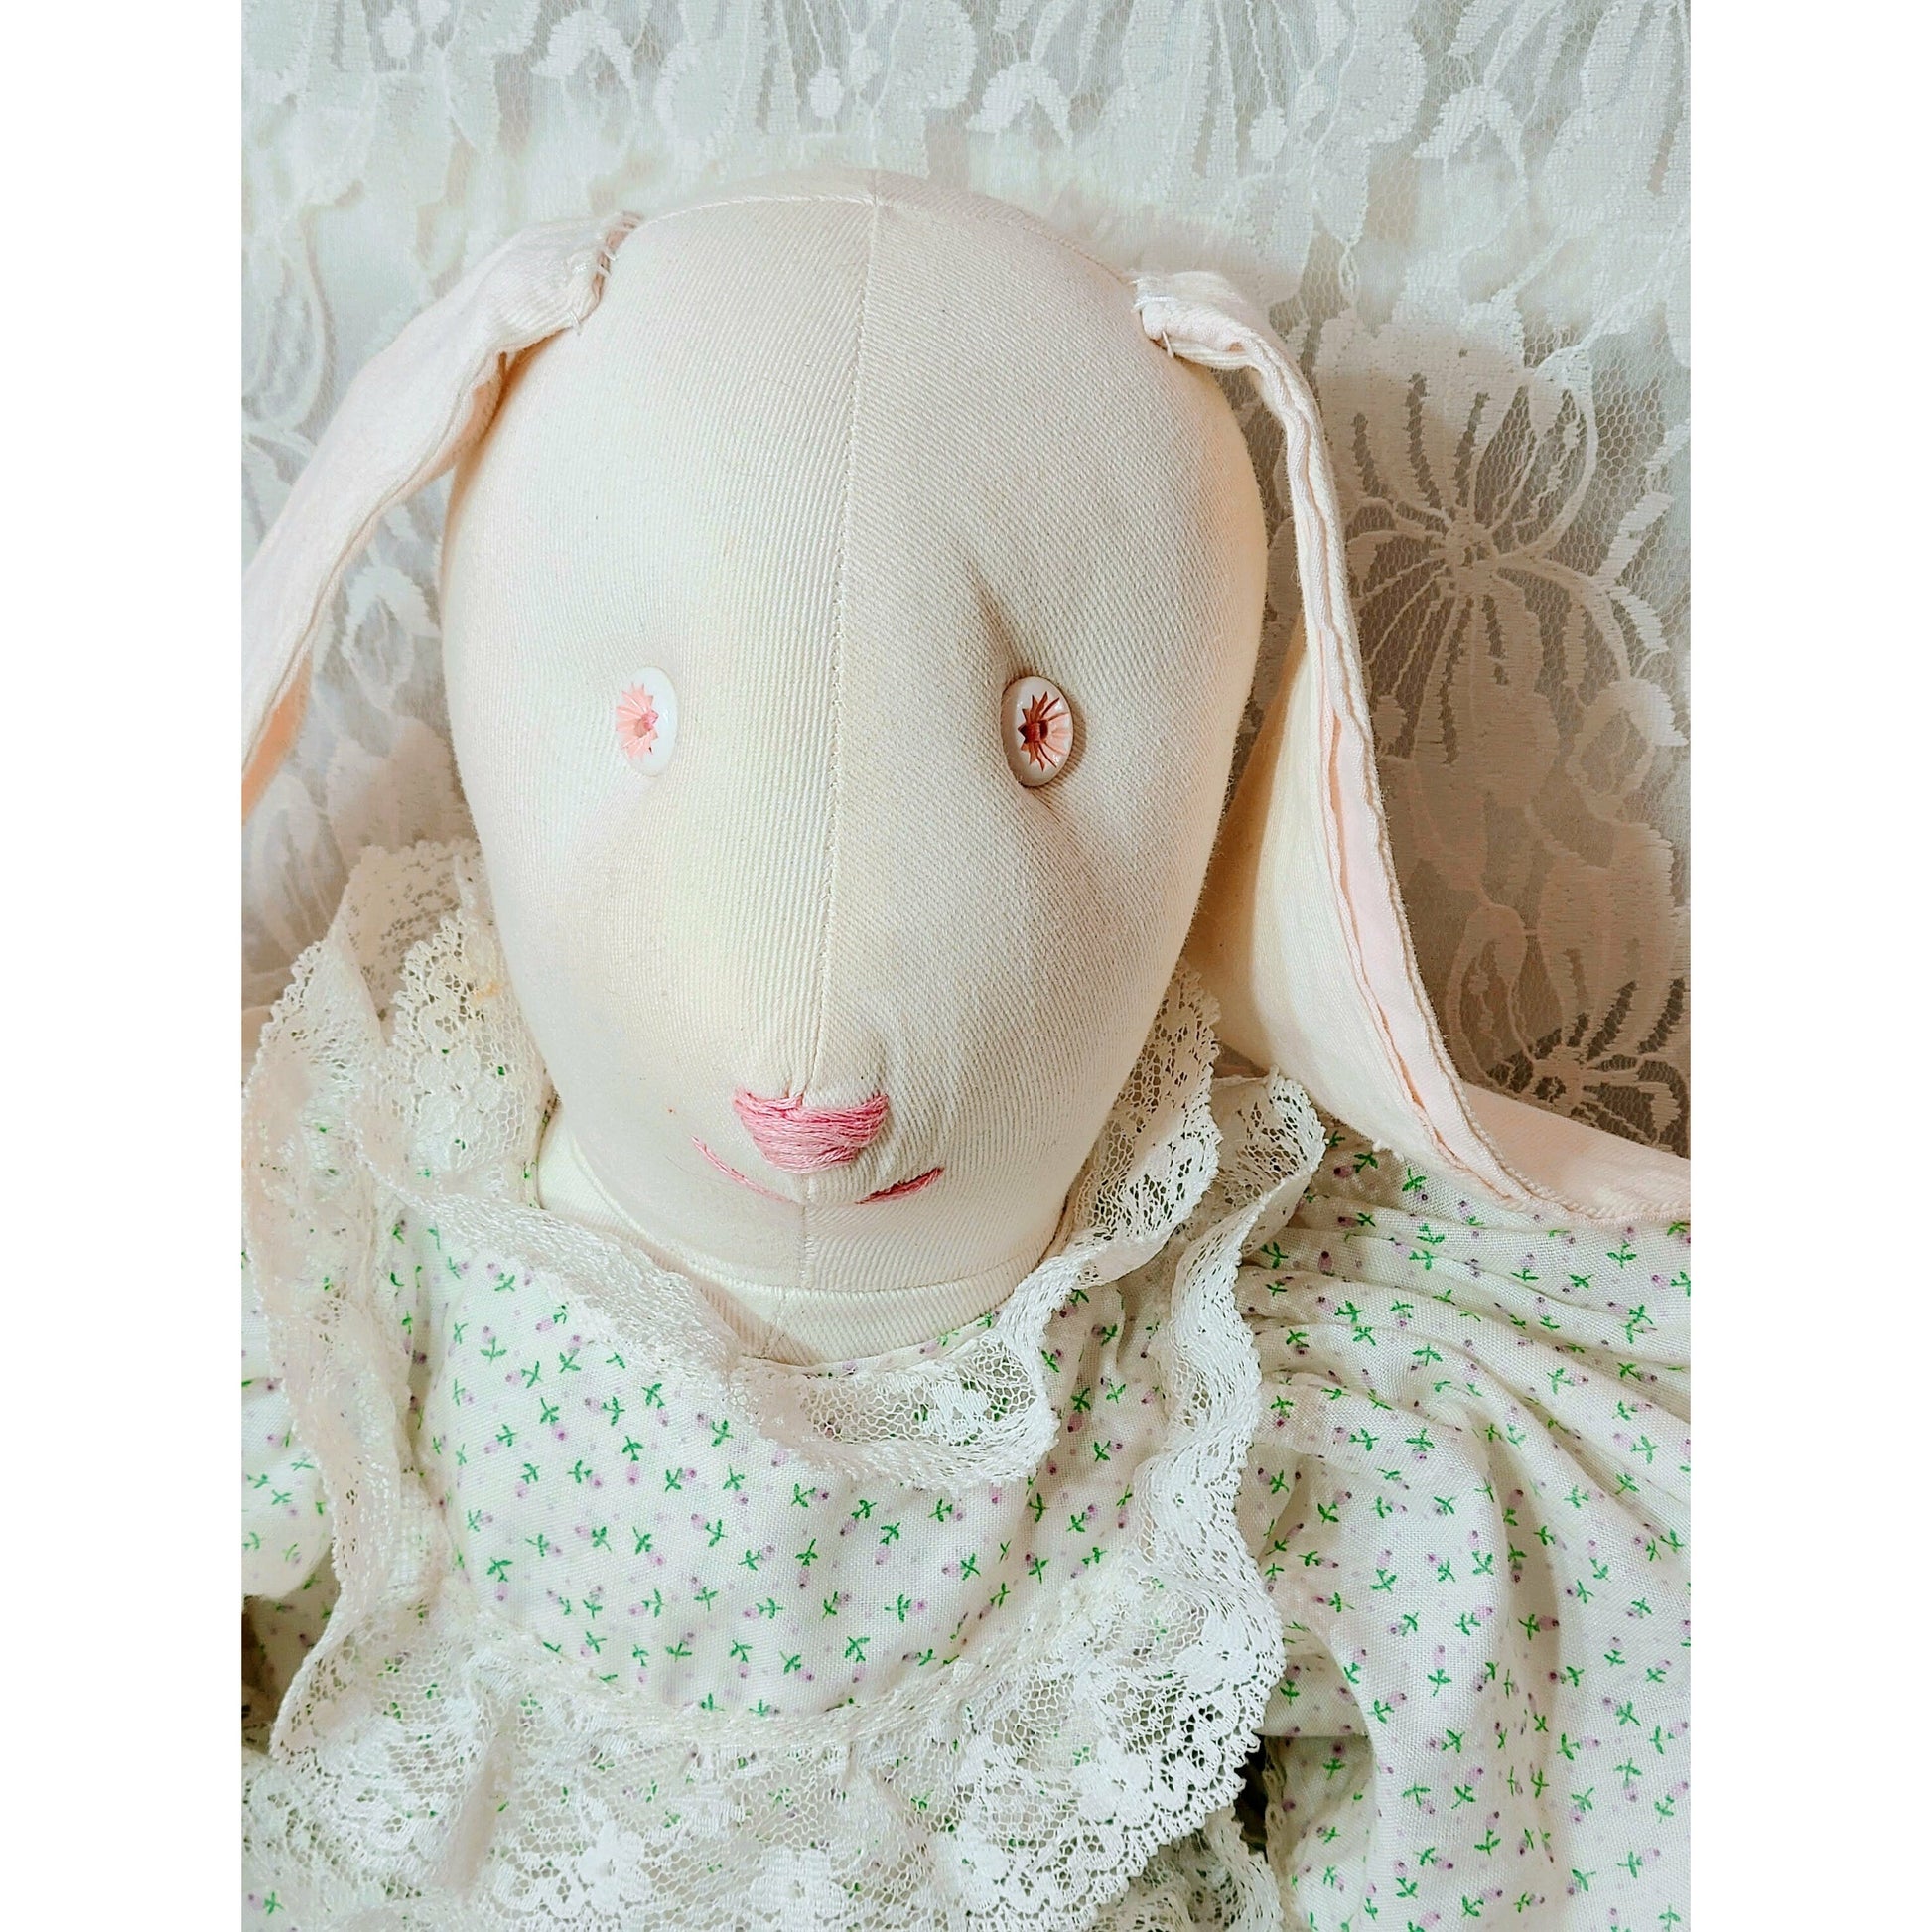 Cloth Bunny Rabbit Hare Girl Doll ~ Handmade 1980s 20" Big OOAK Grandma Style Plush Stuffed Animal Bunny Rabbit ~ Textile Rag Doll